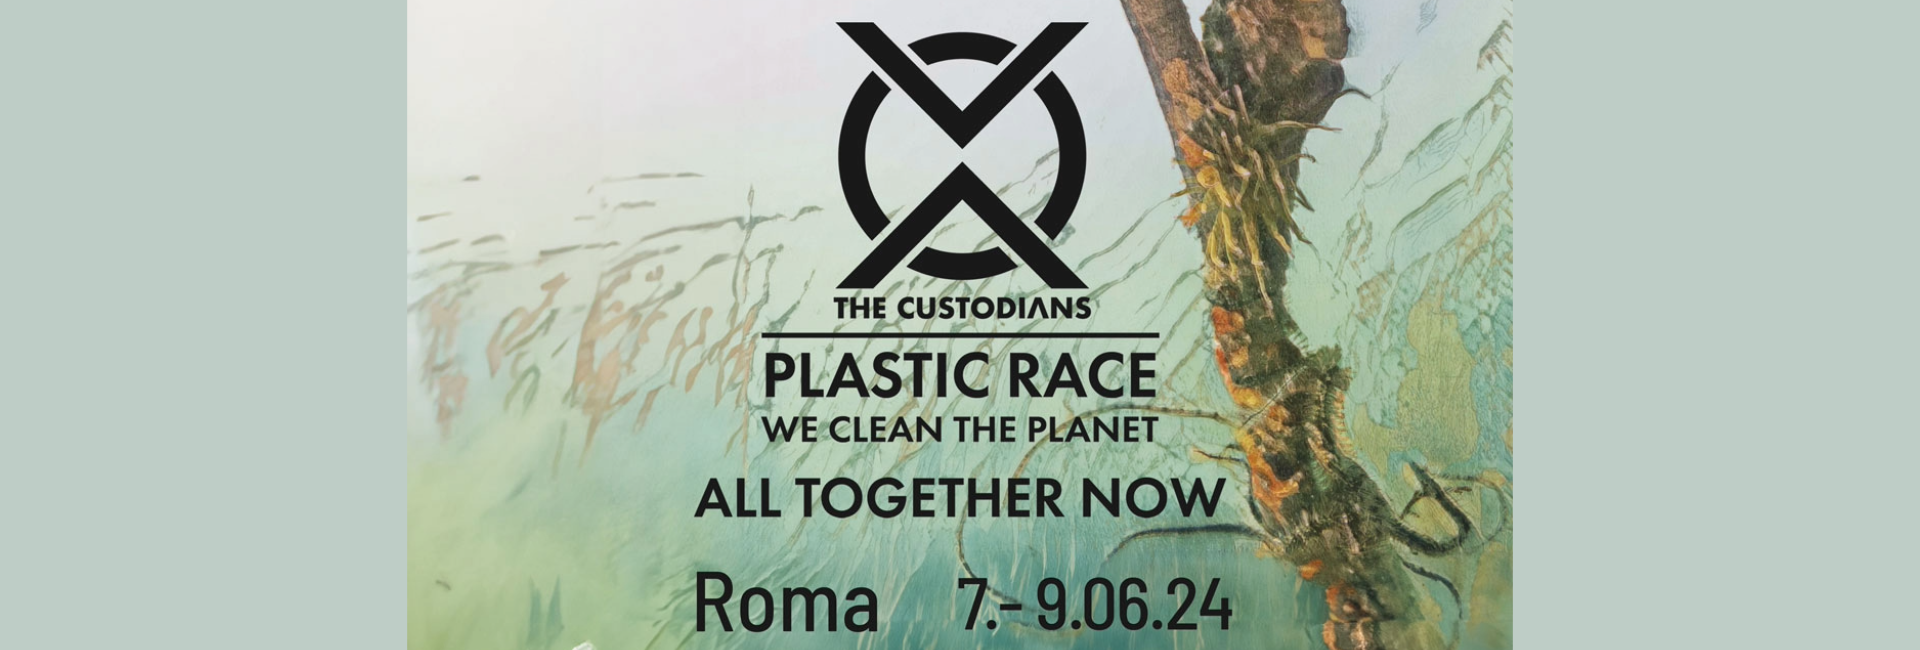 The Custodians Plastic Race Tour sbarca a Roma